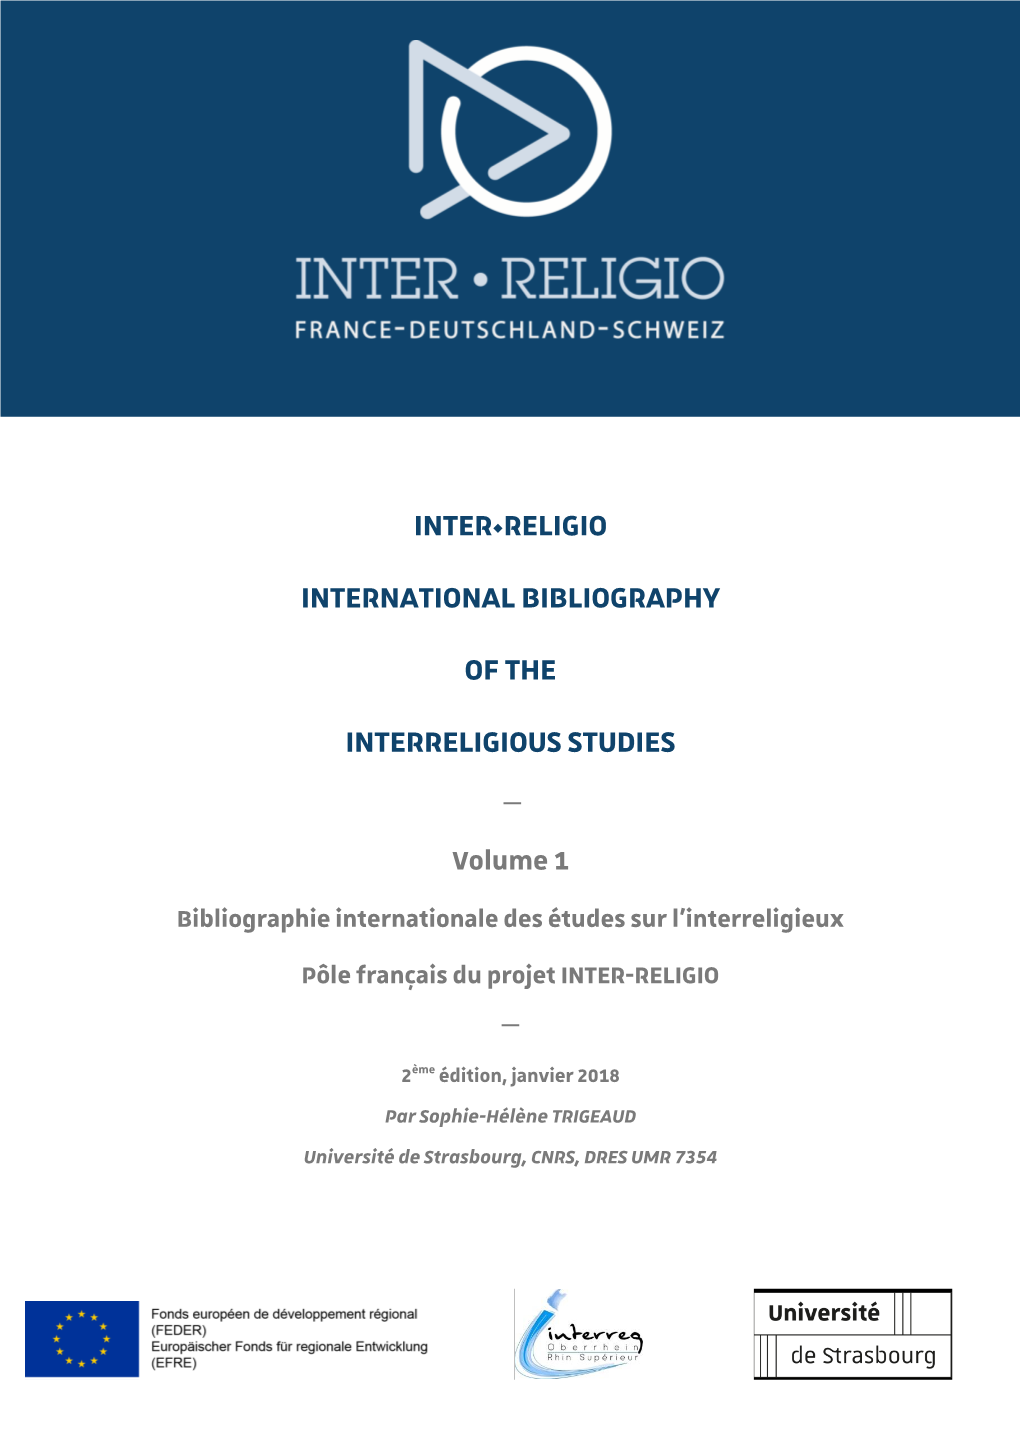 Inter-Religio: International Bibliography